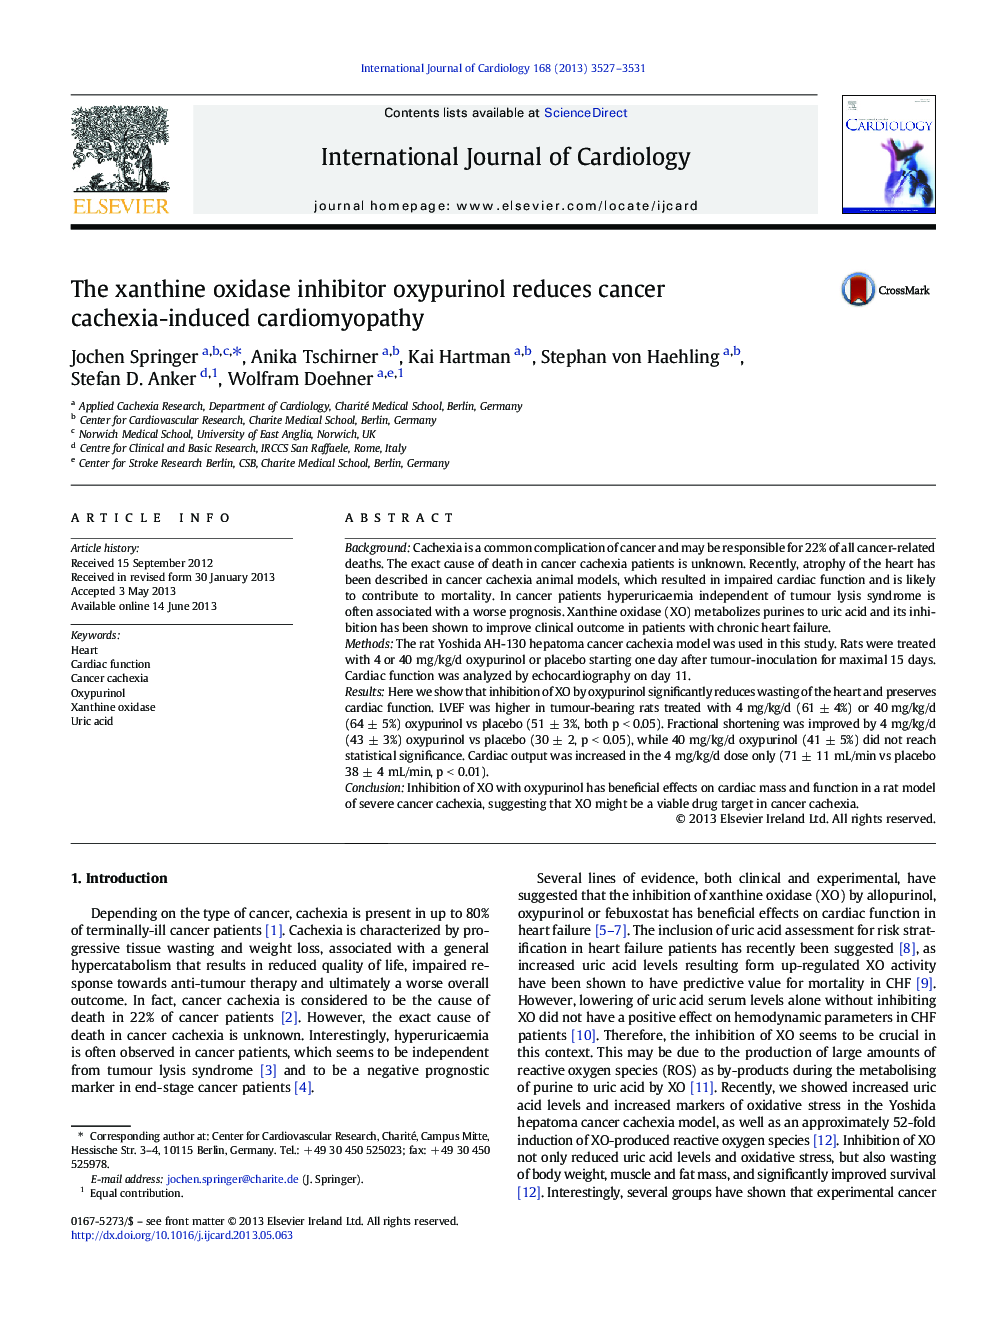 The xanthine oxidase inhibitor oxypurinol reduces cancer cachexia-induced cardiomyopathy